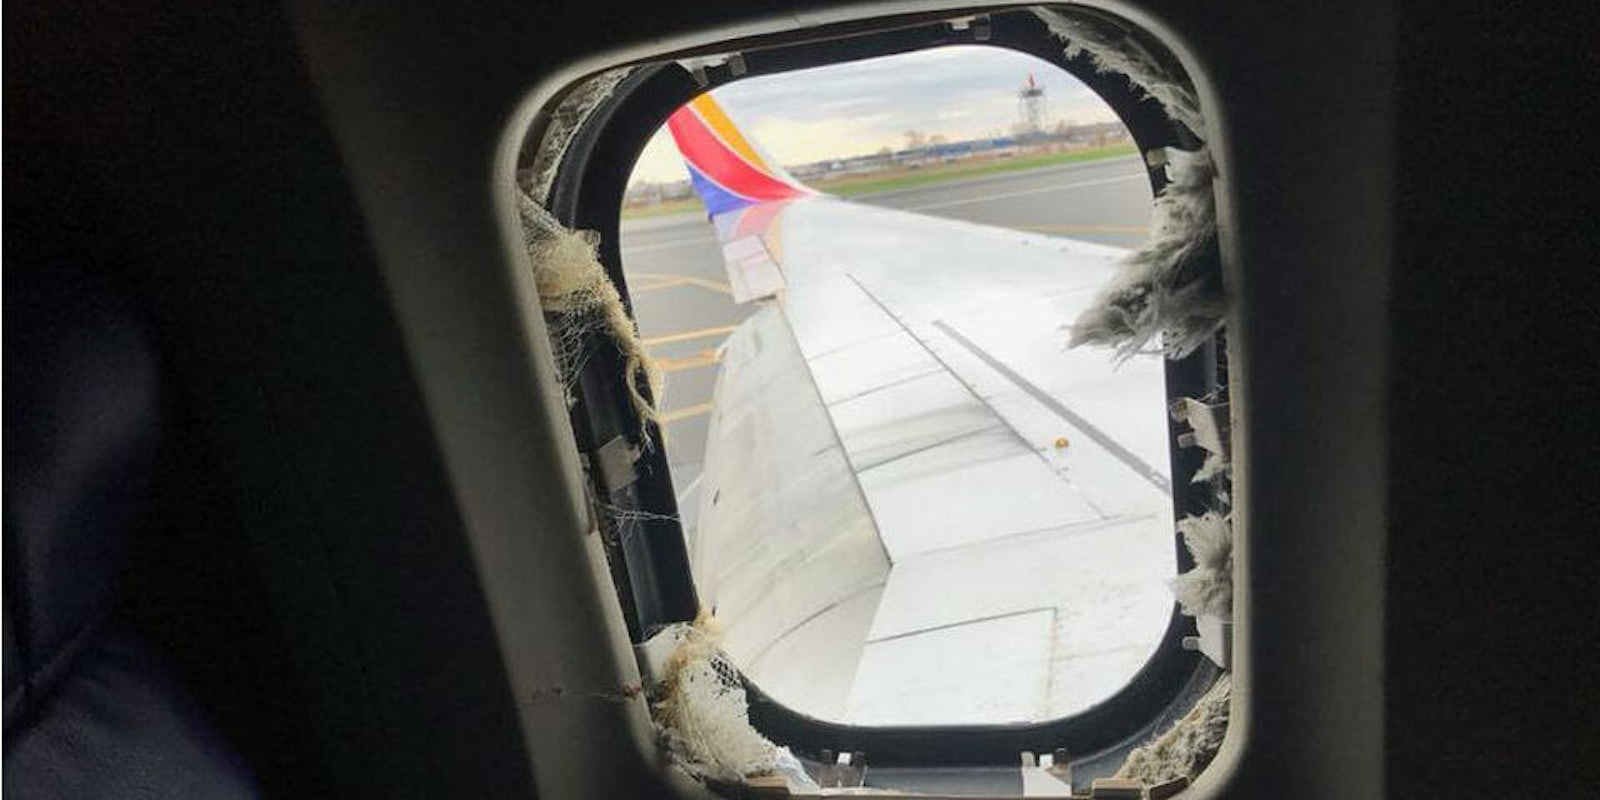 southwest airlines incident flight 1380